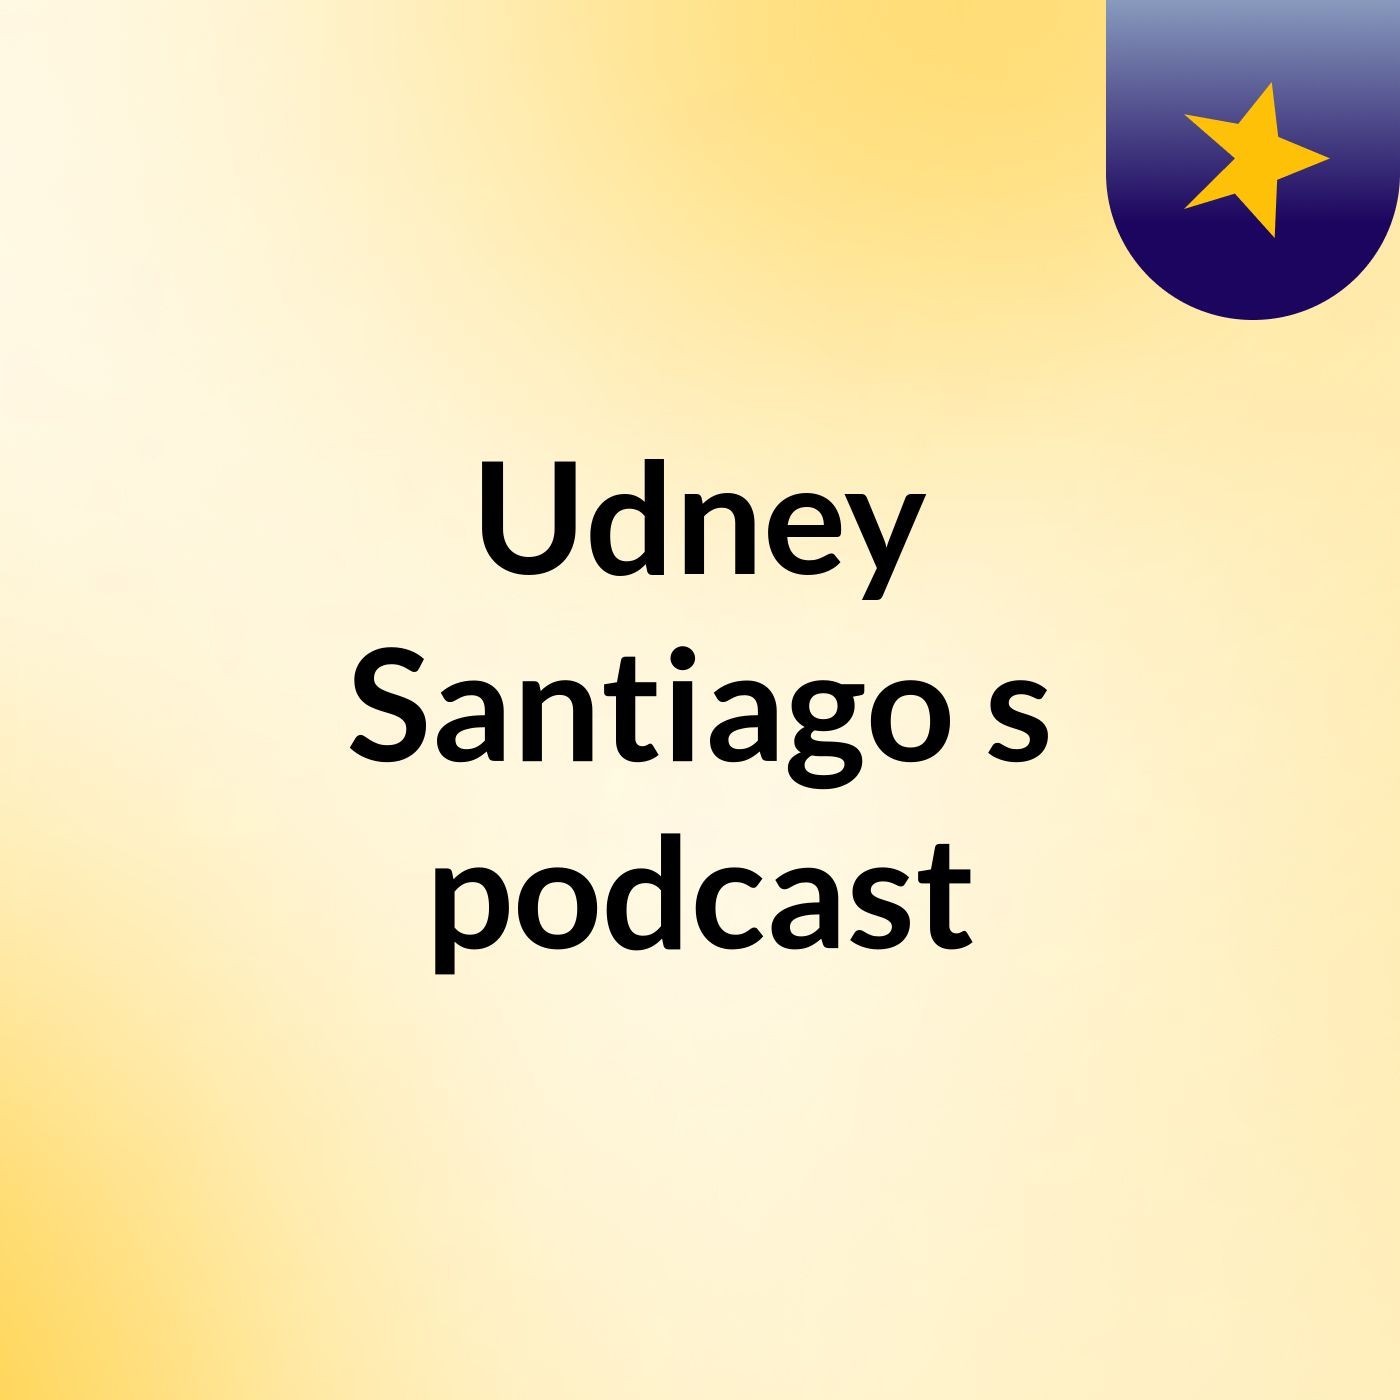 Episódio 3 - Udney Santiago's podcast